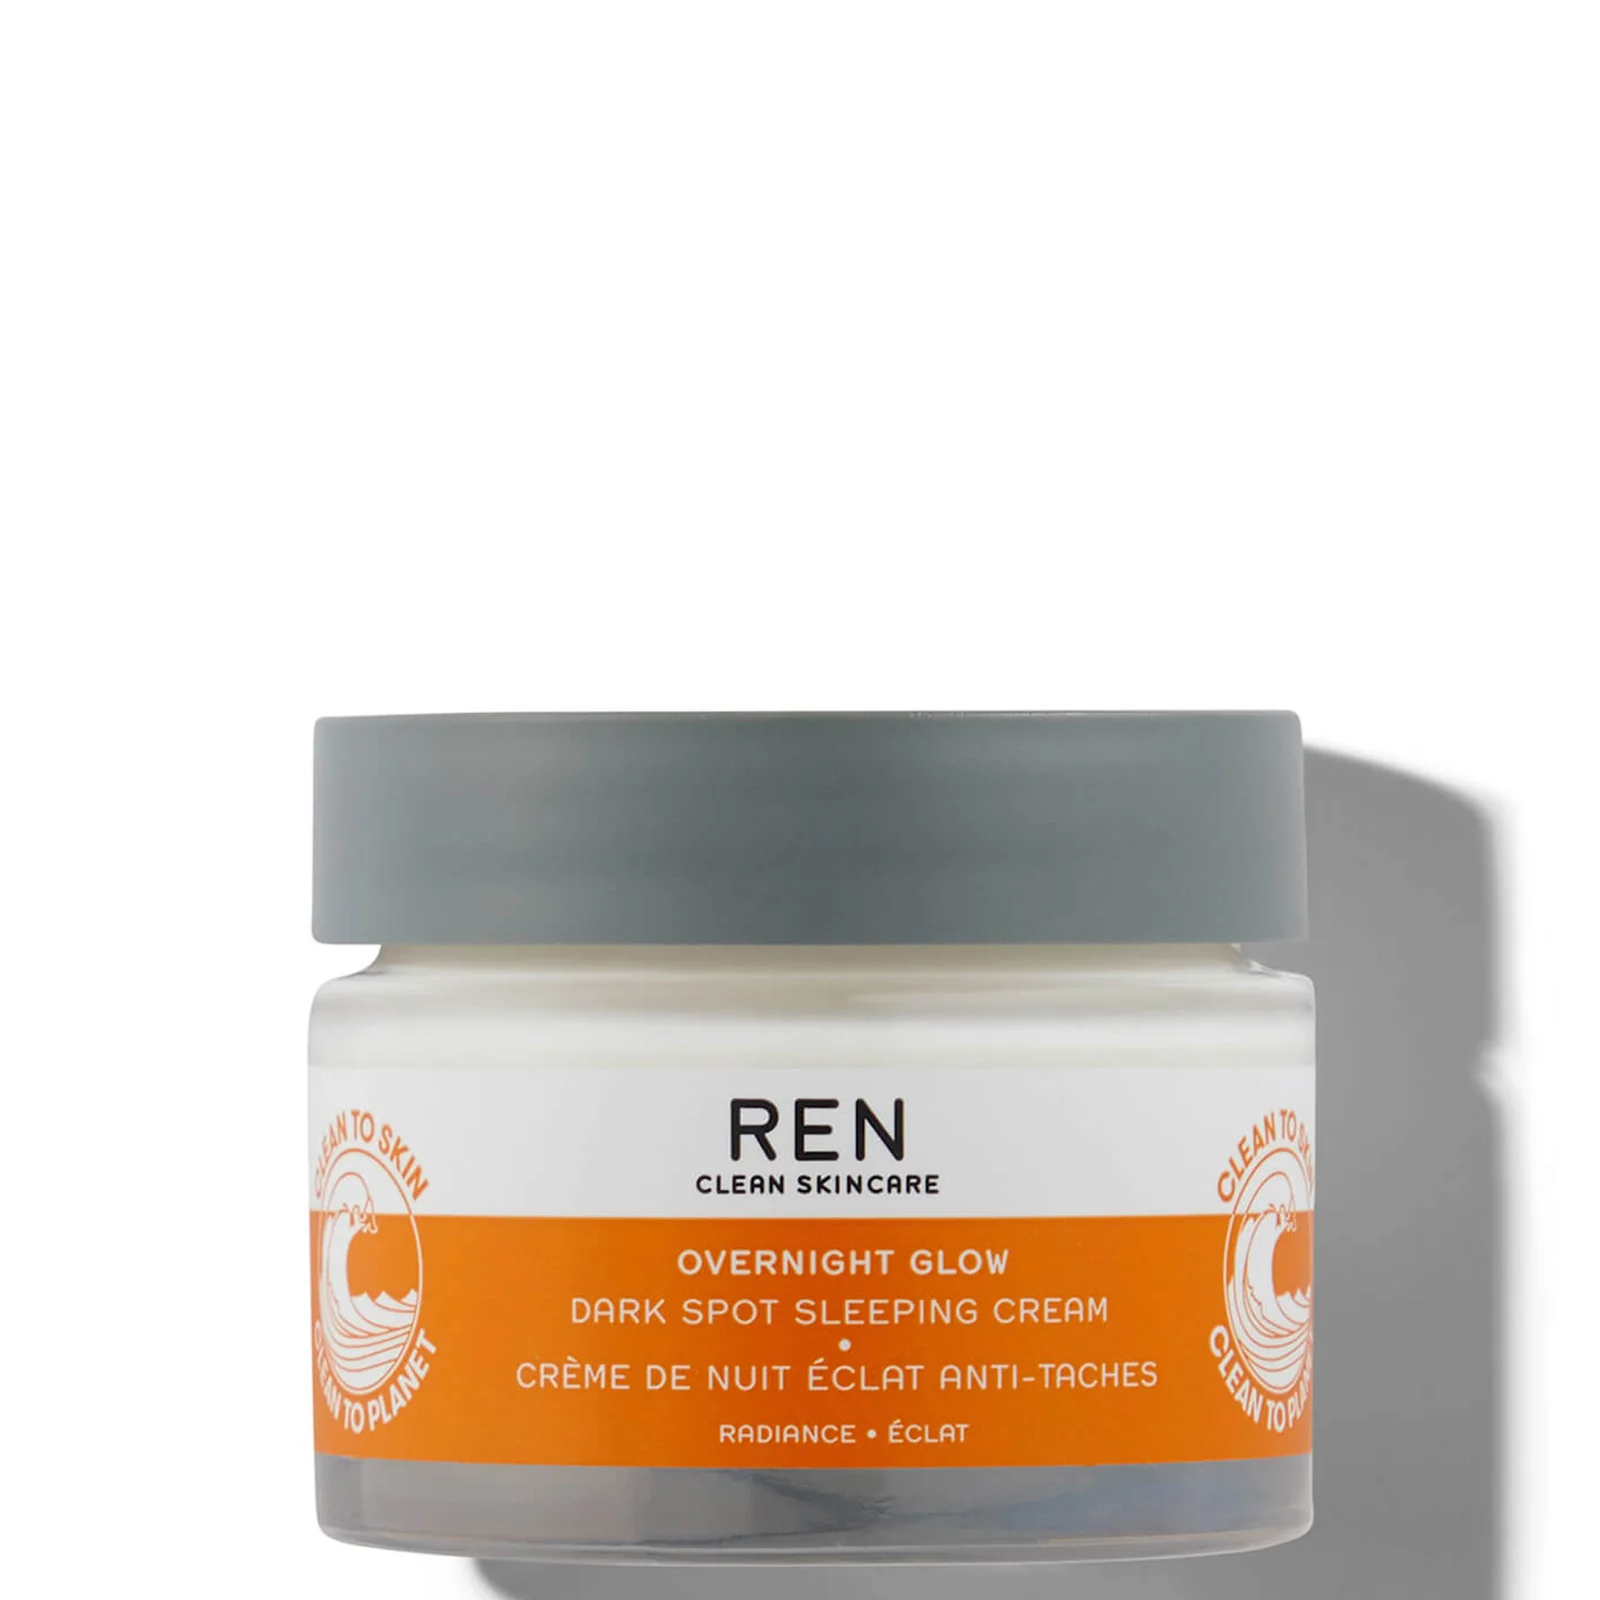 REN Clean Skincare Overnight Glow Dark Spot Sleeping Cream 50ml Image 1